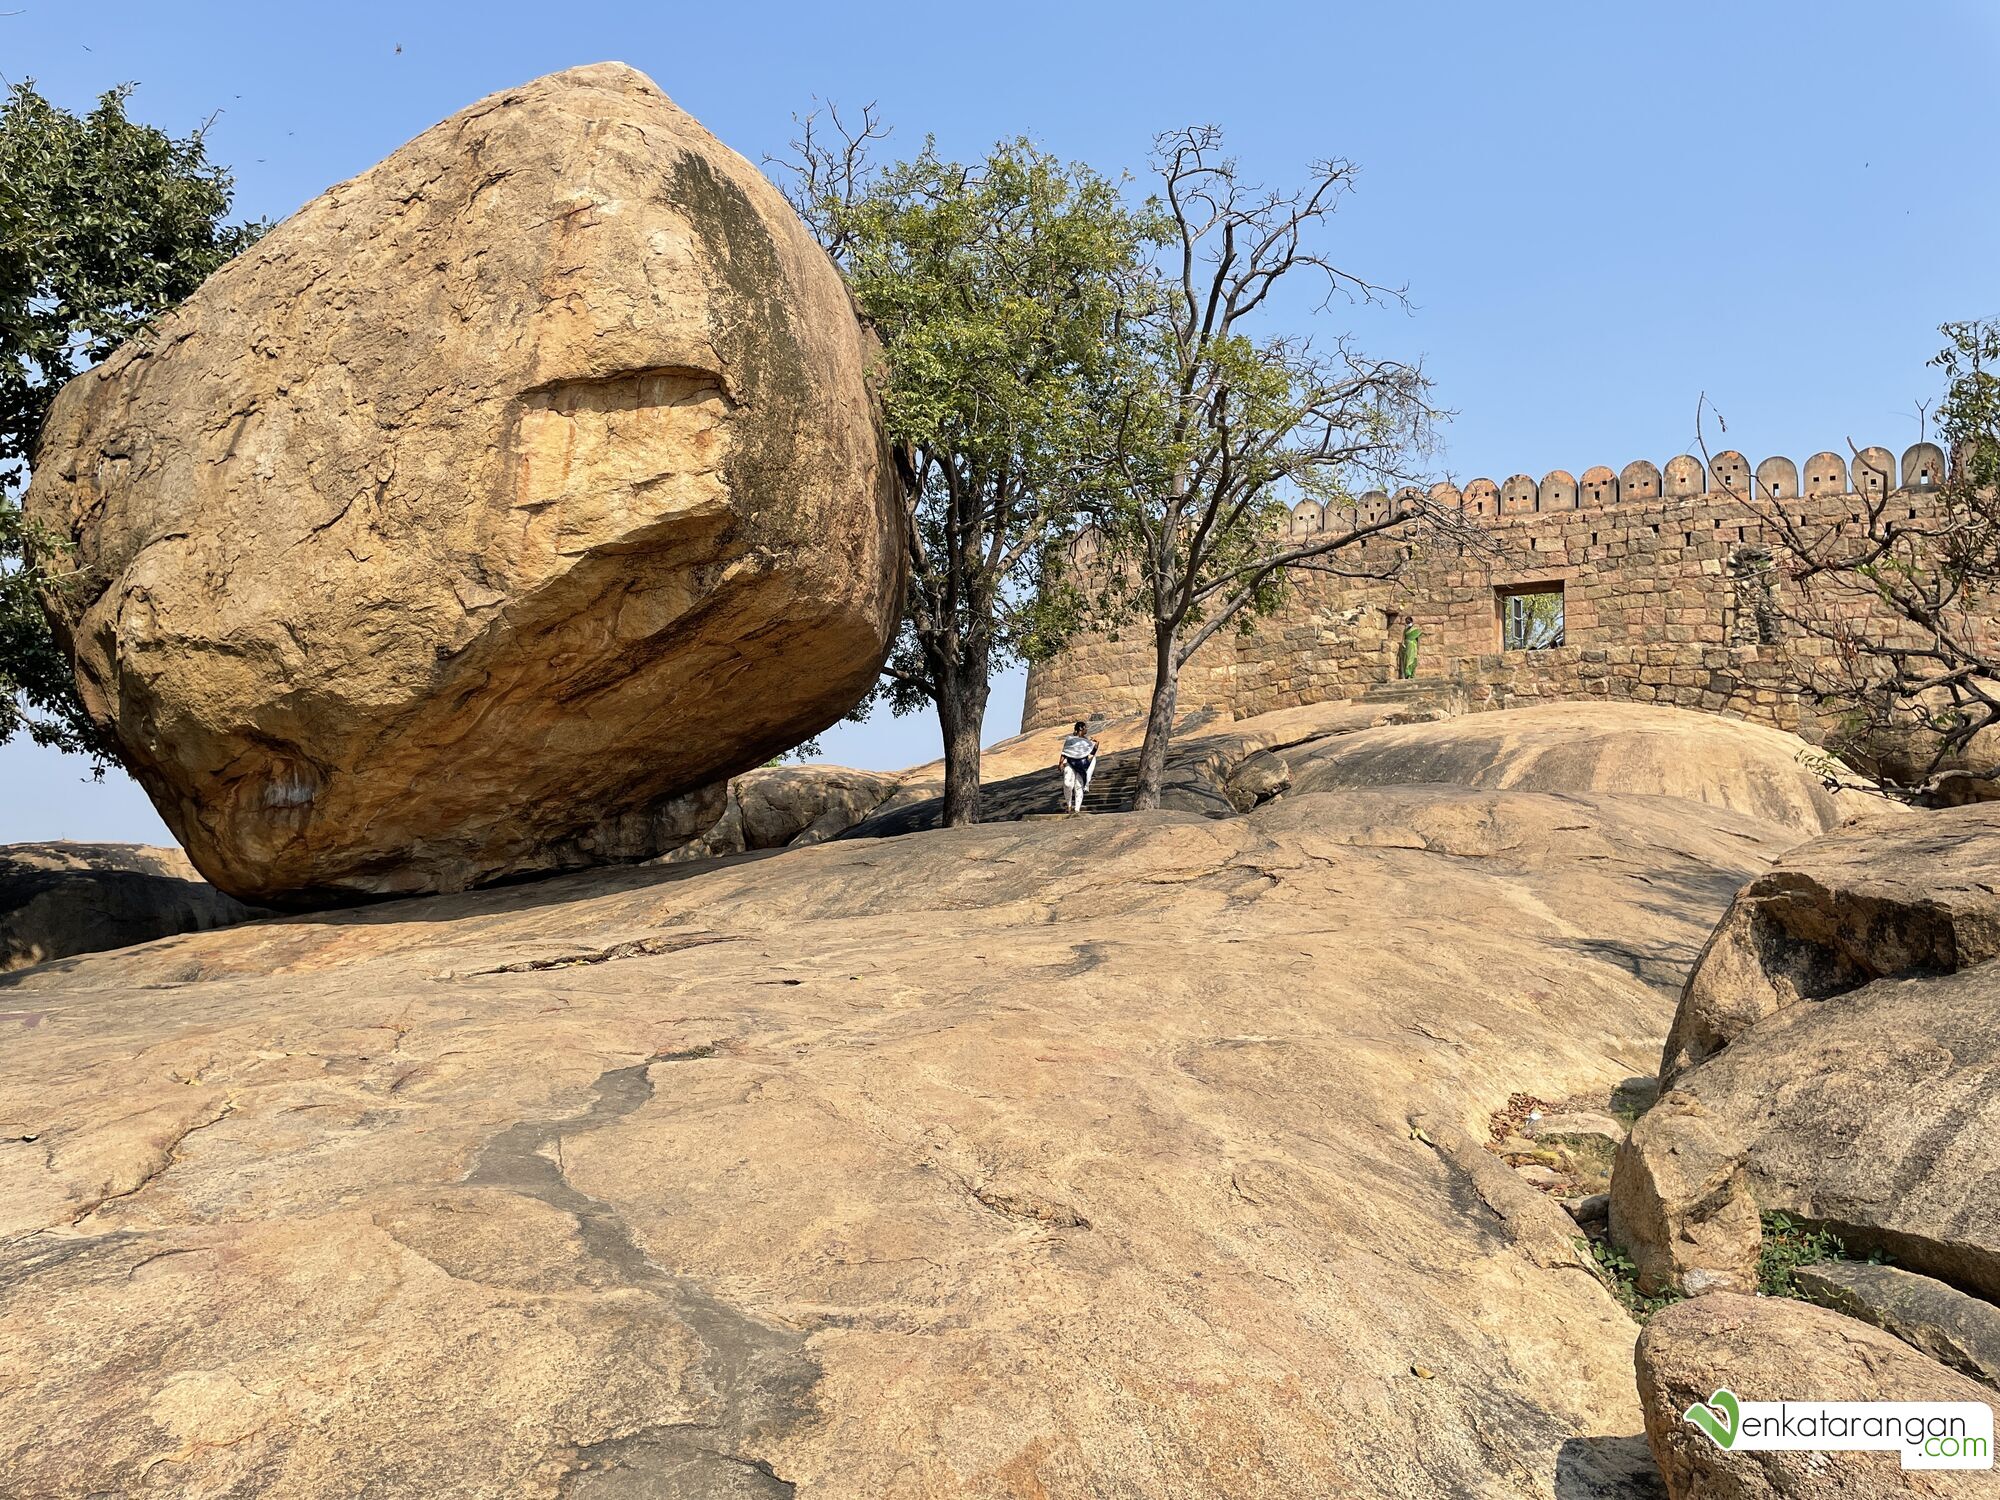 Another big boulder in Thirumayam fort 